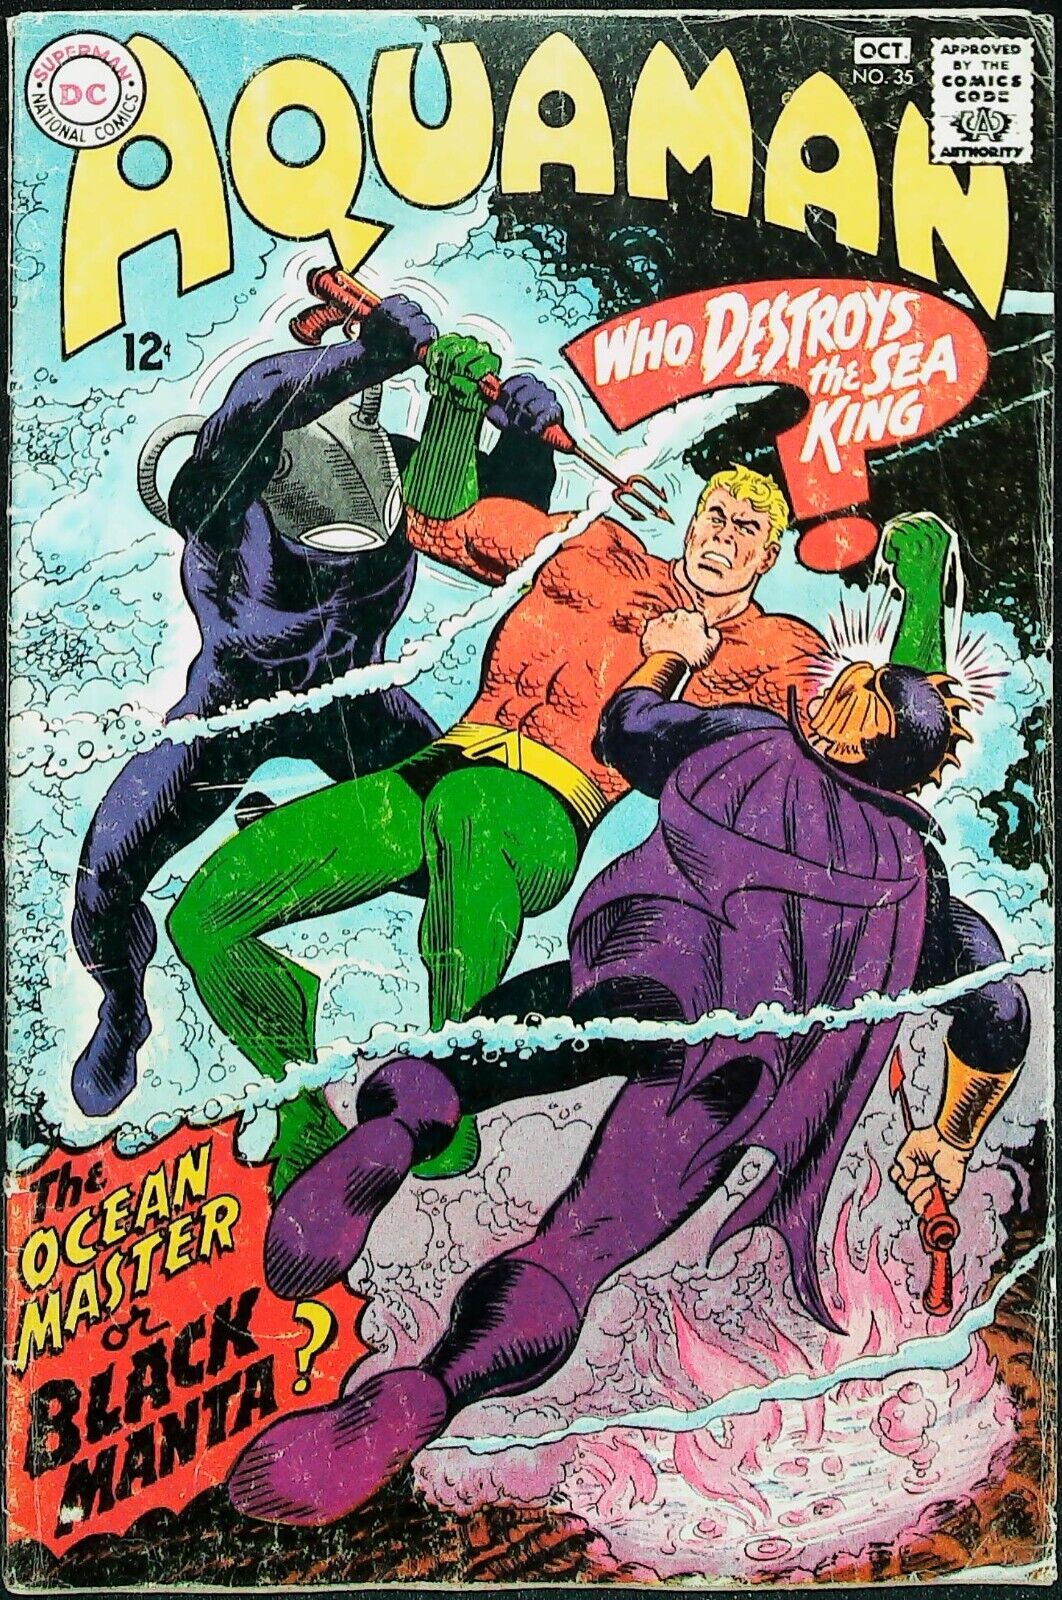 Aquaman #35 Vol 1 (1967) KEY *1st Appearance of Black Manta* - Good Range